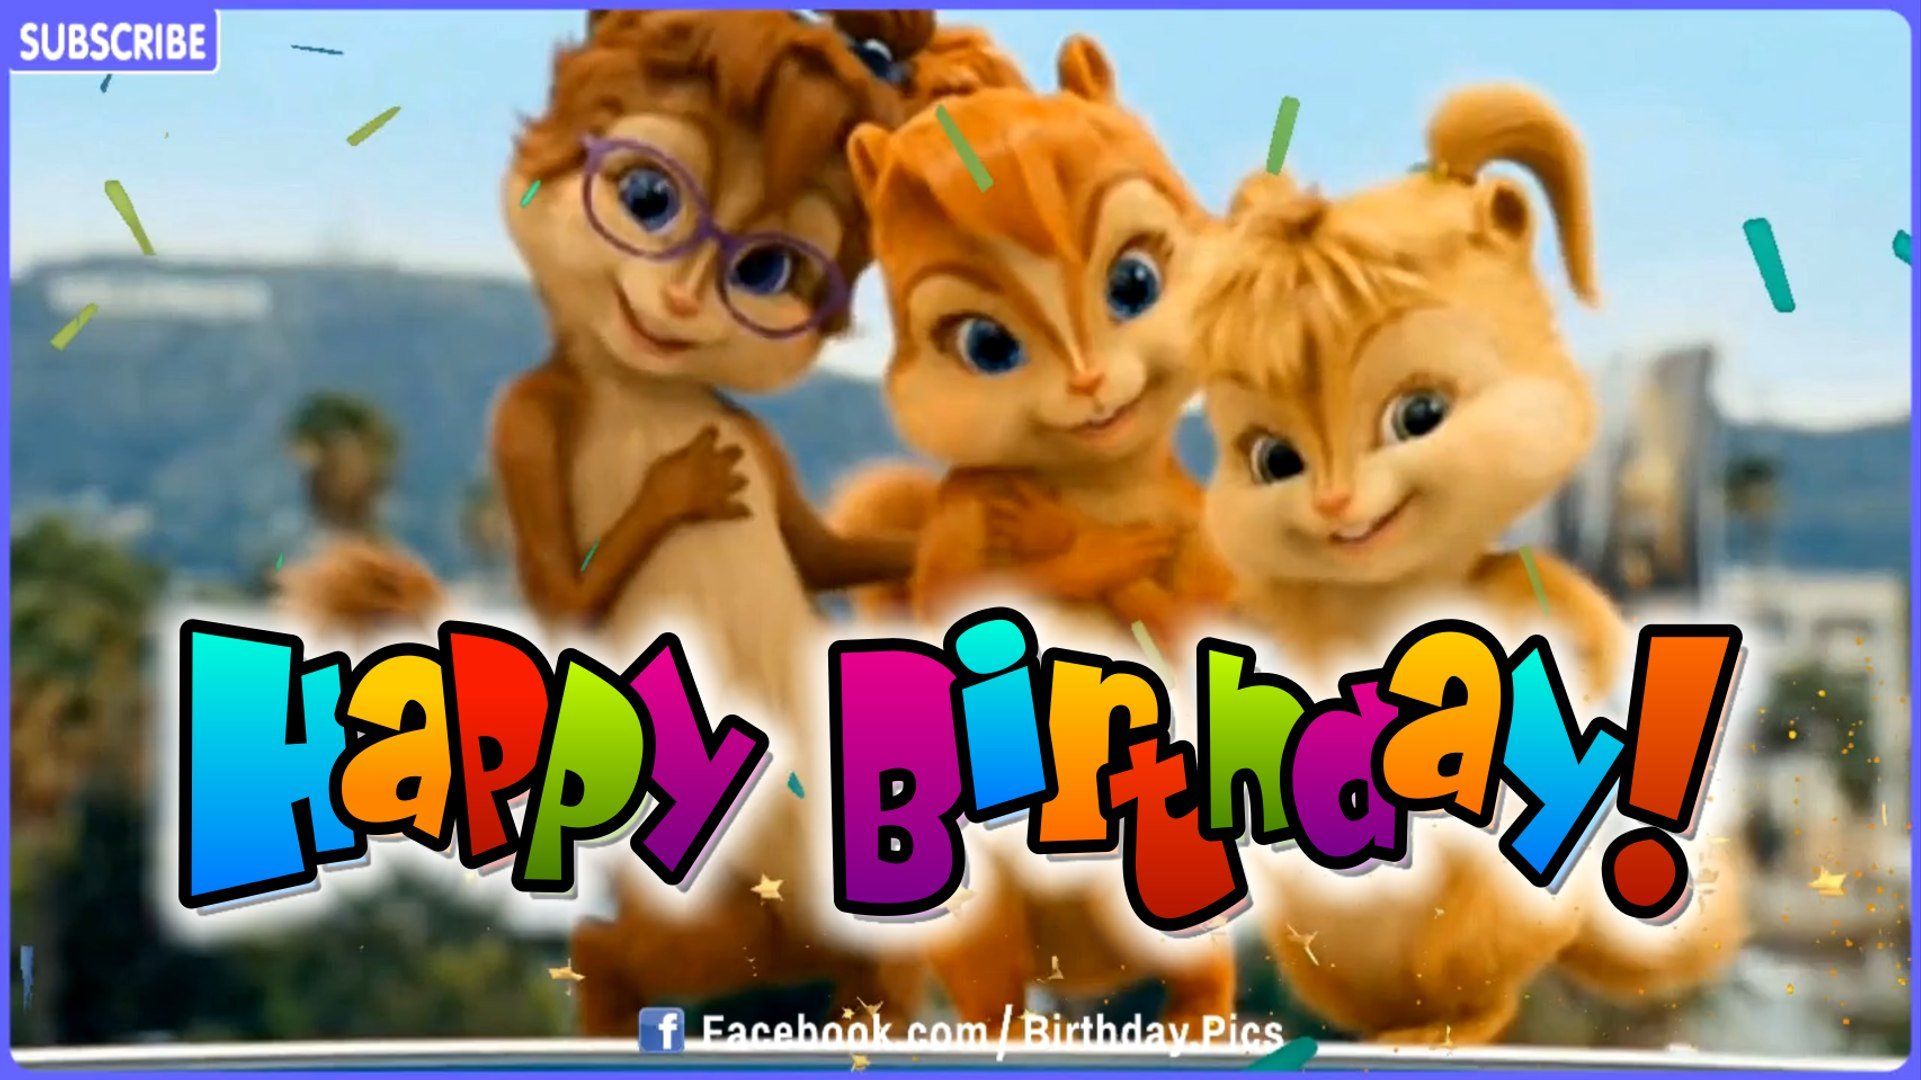 Happy birthday song chipmunks funny